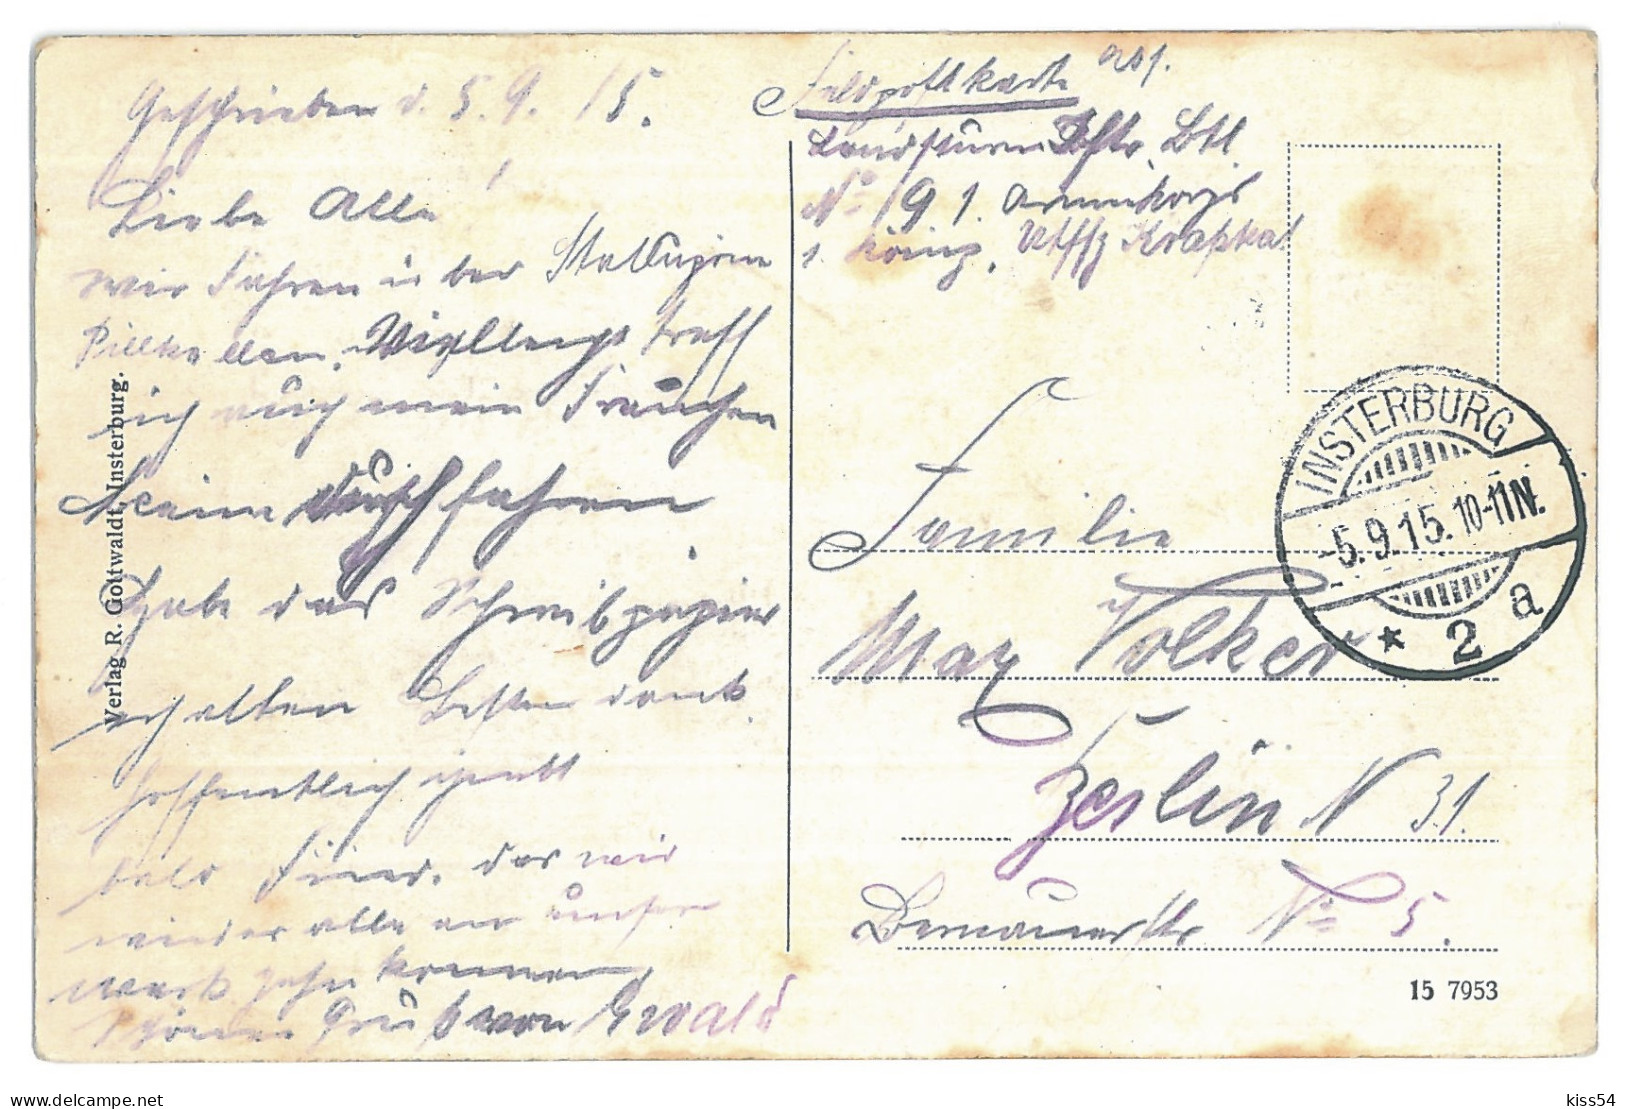 RUS 22 - 13736 CERNEAHOVSK, Russia, Kaliningrad, Military Parade - Old Postcard, CENSOR - Used - 1915 - Russland